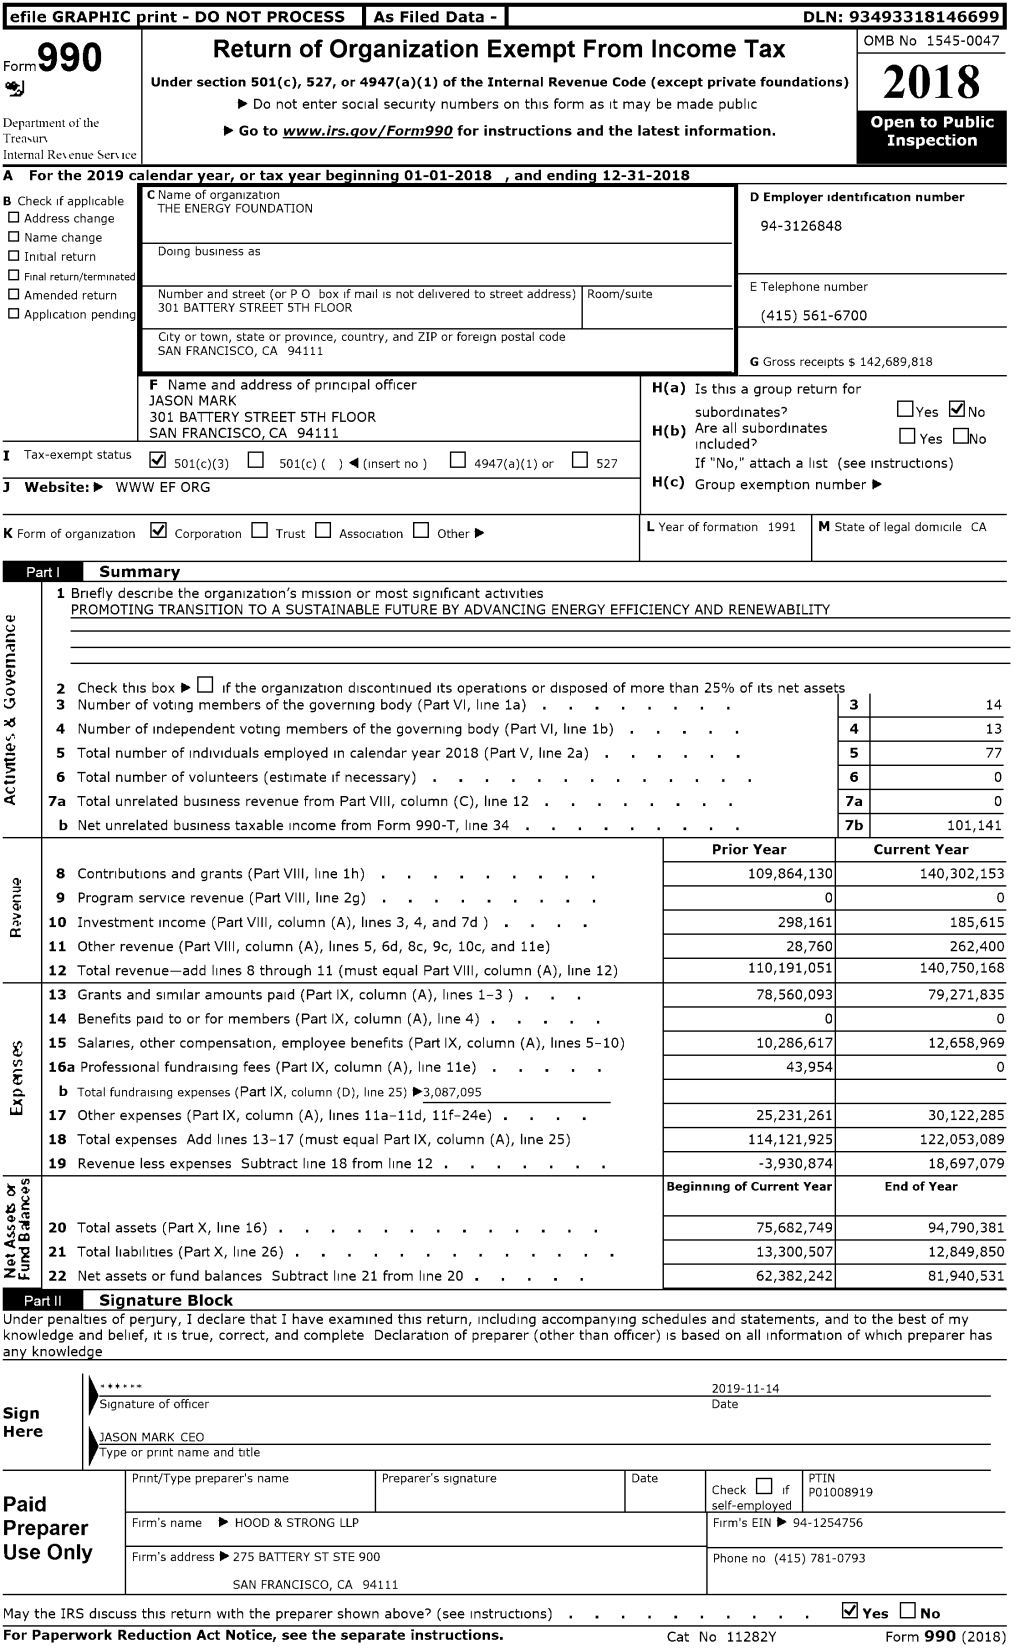 2018 IRS Form